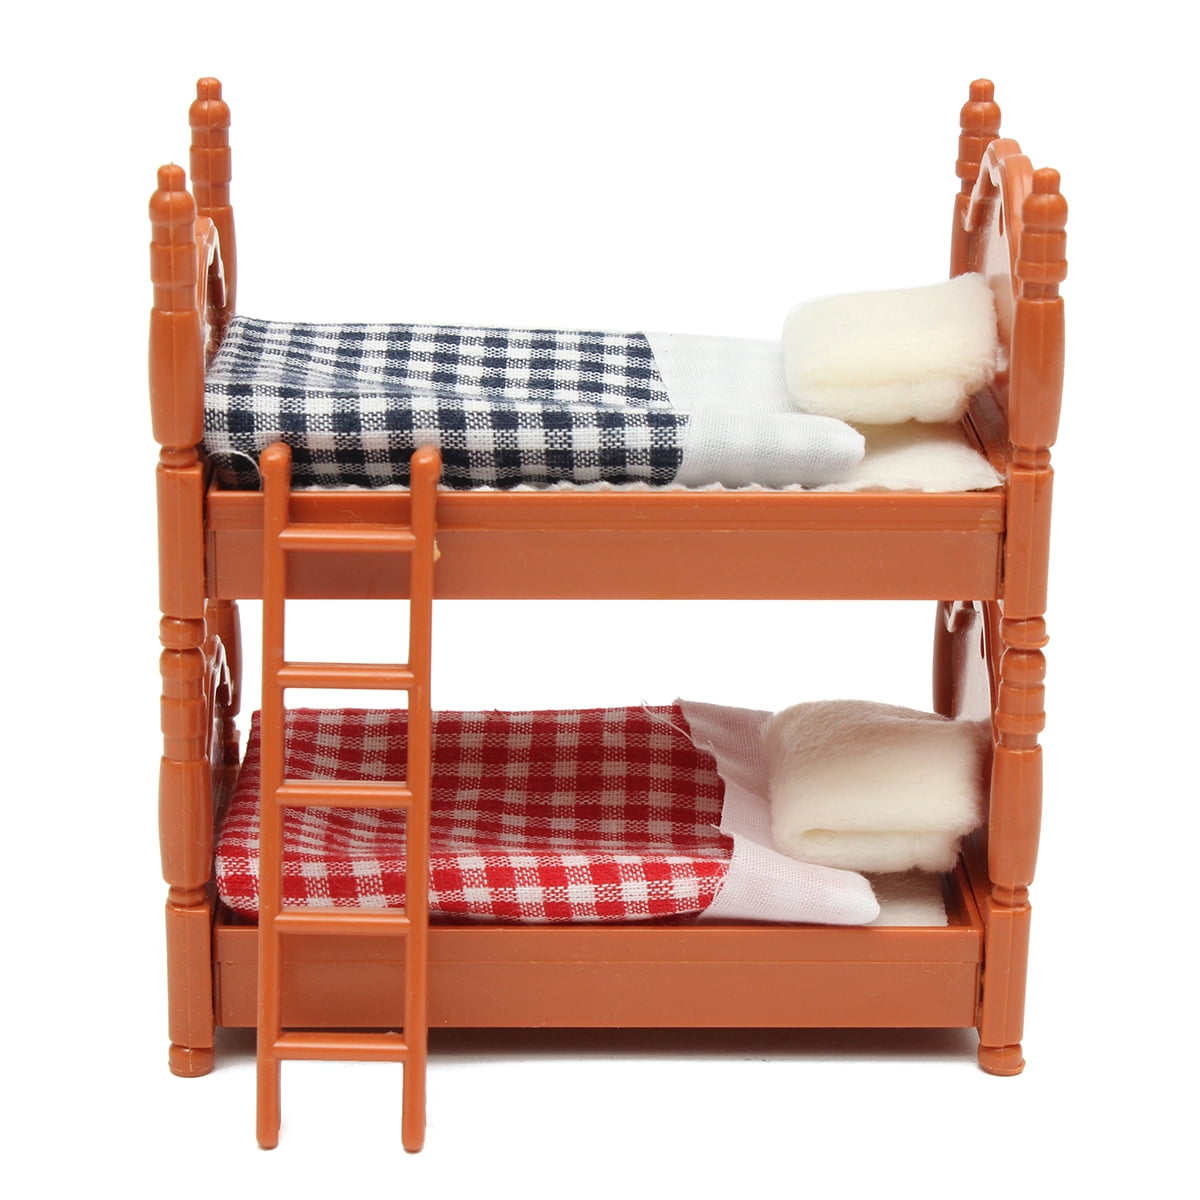 Dollhouse Furniture Sets Miniature, Bunk Bed Furniture Sets